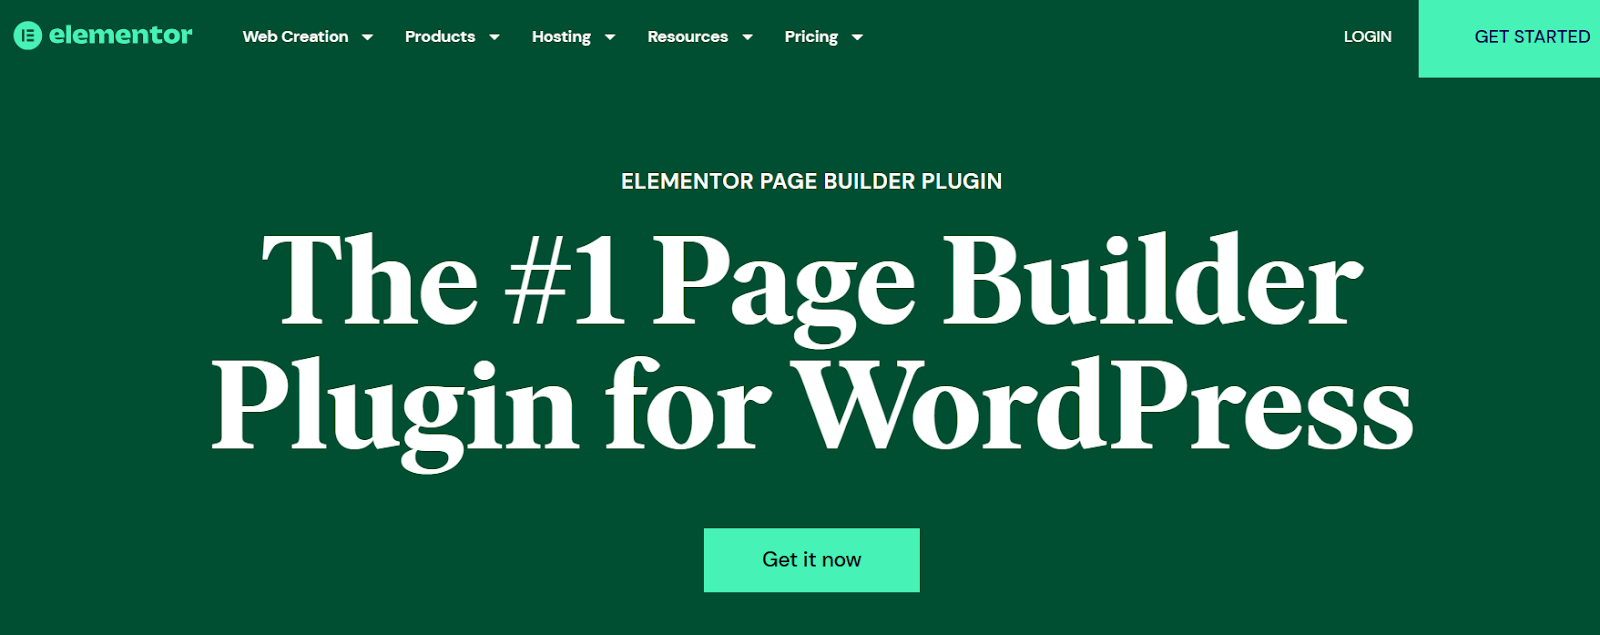 Elementor Website Builder homepage